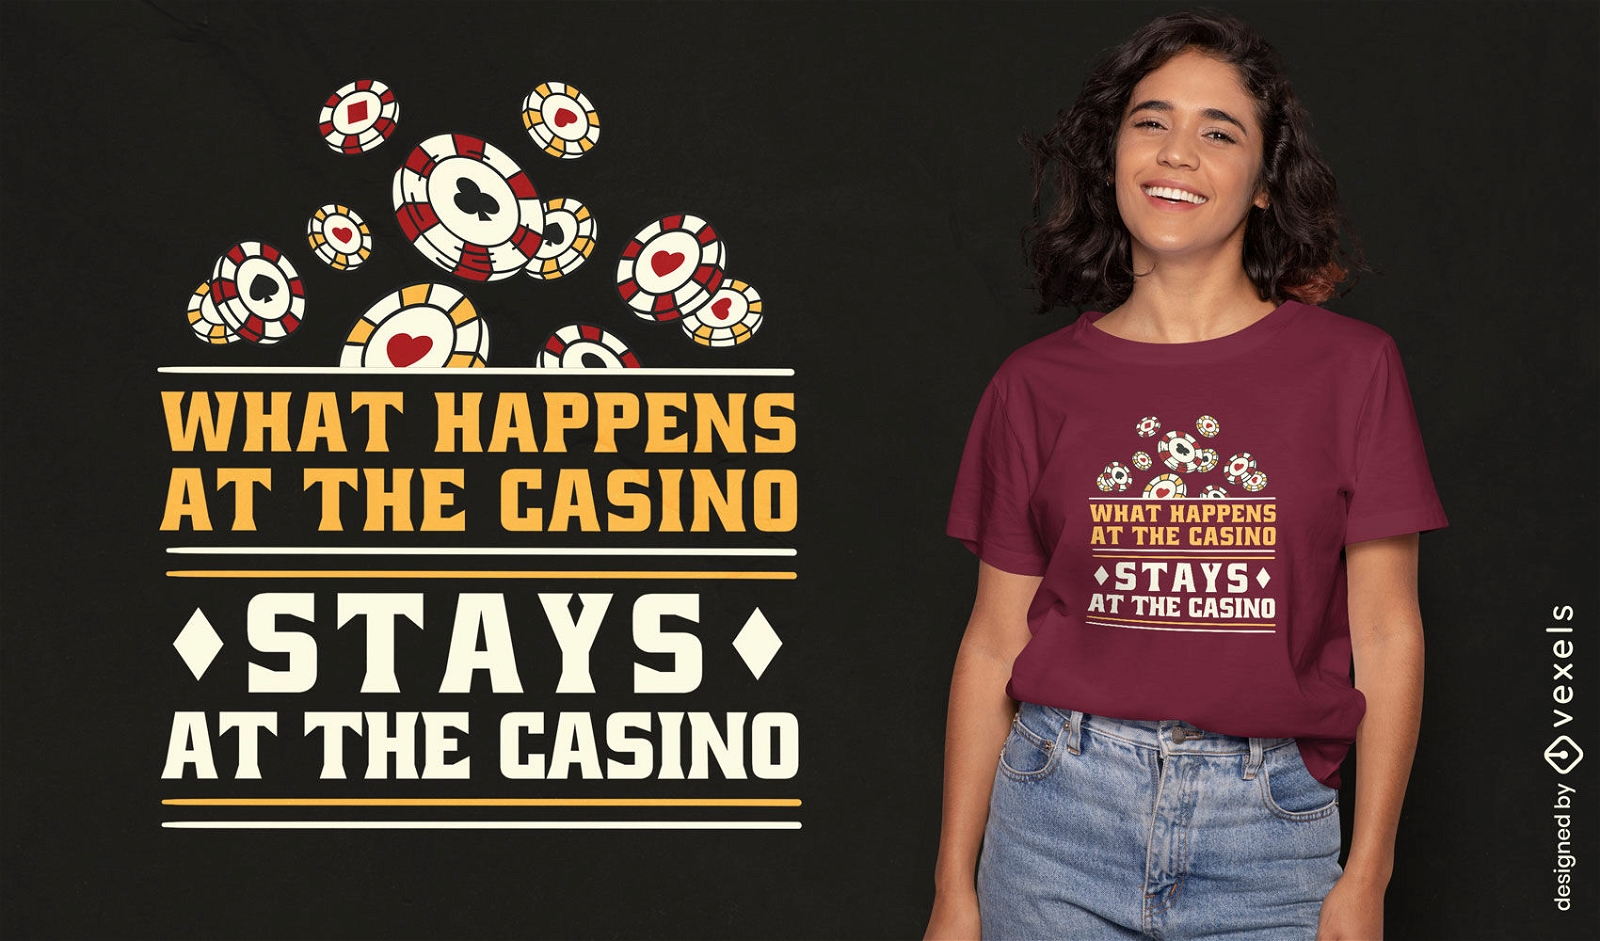 Secrecy themed casino t-shirt design